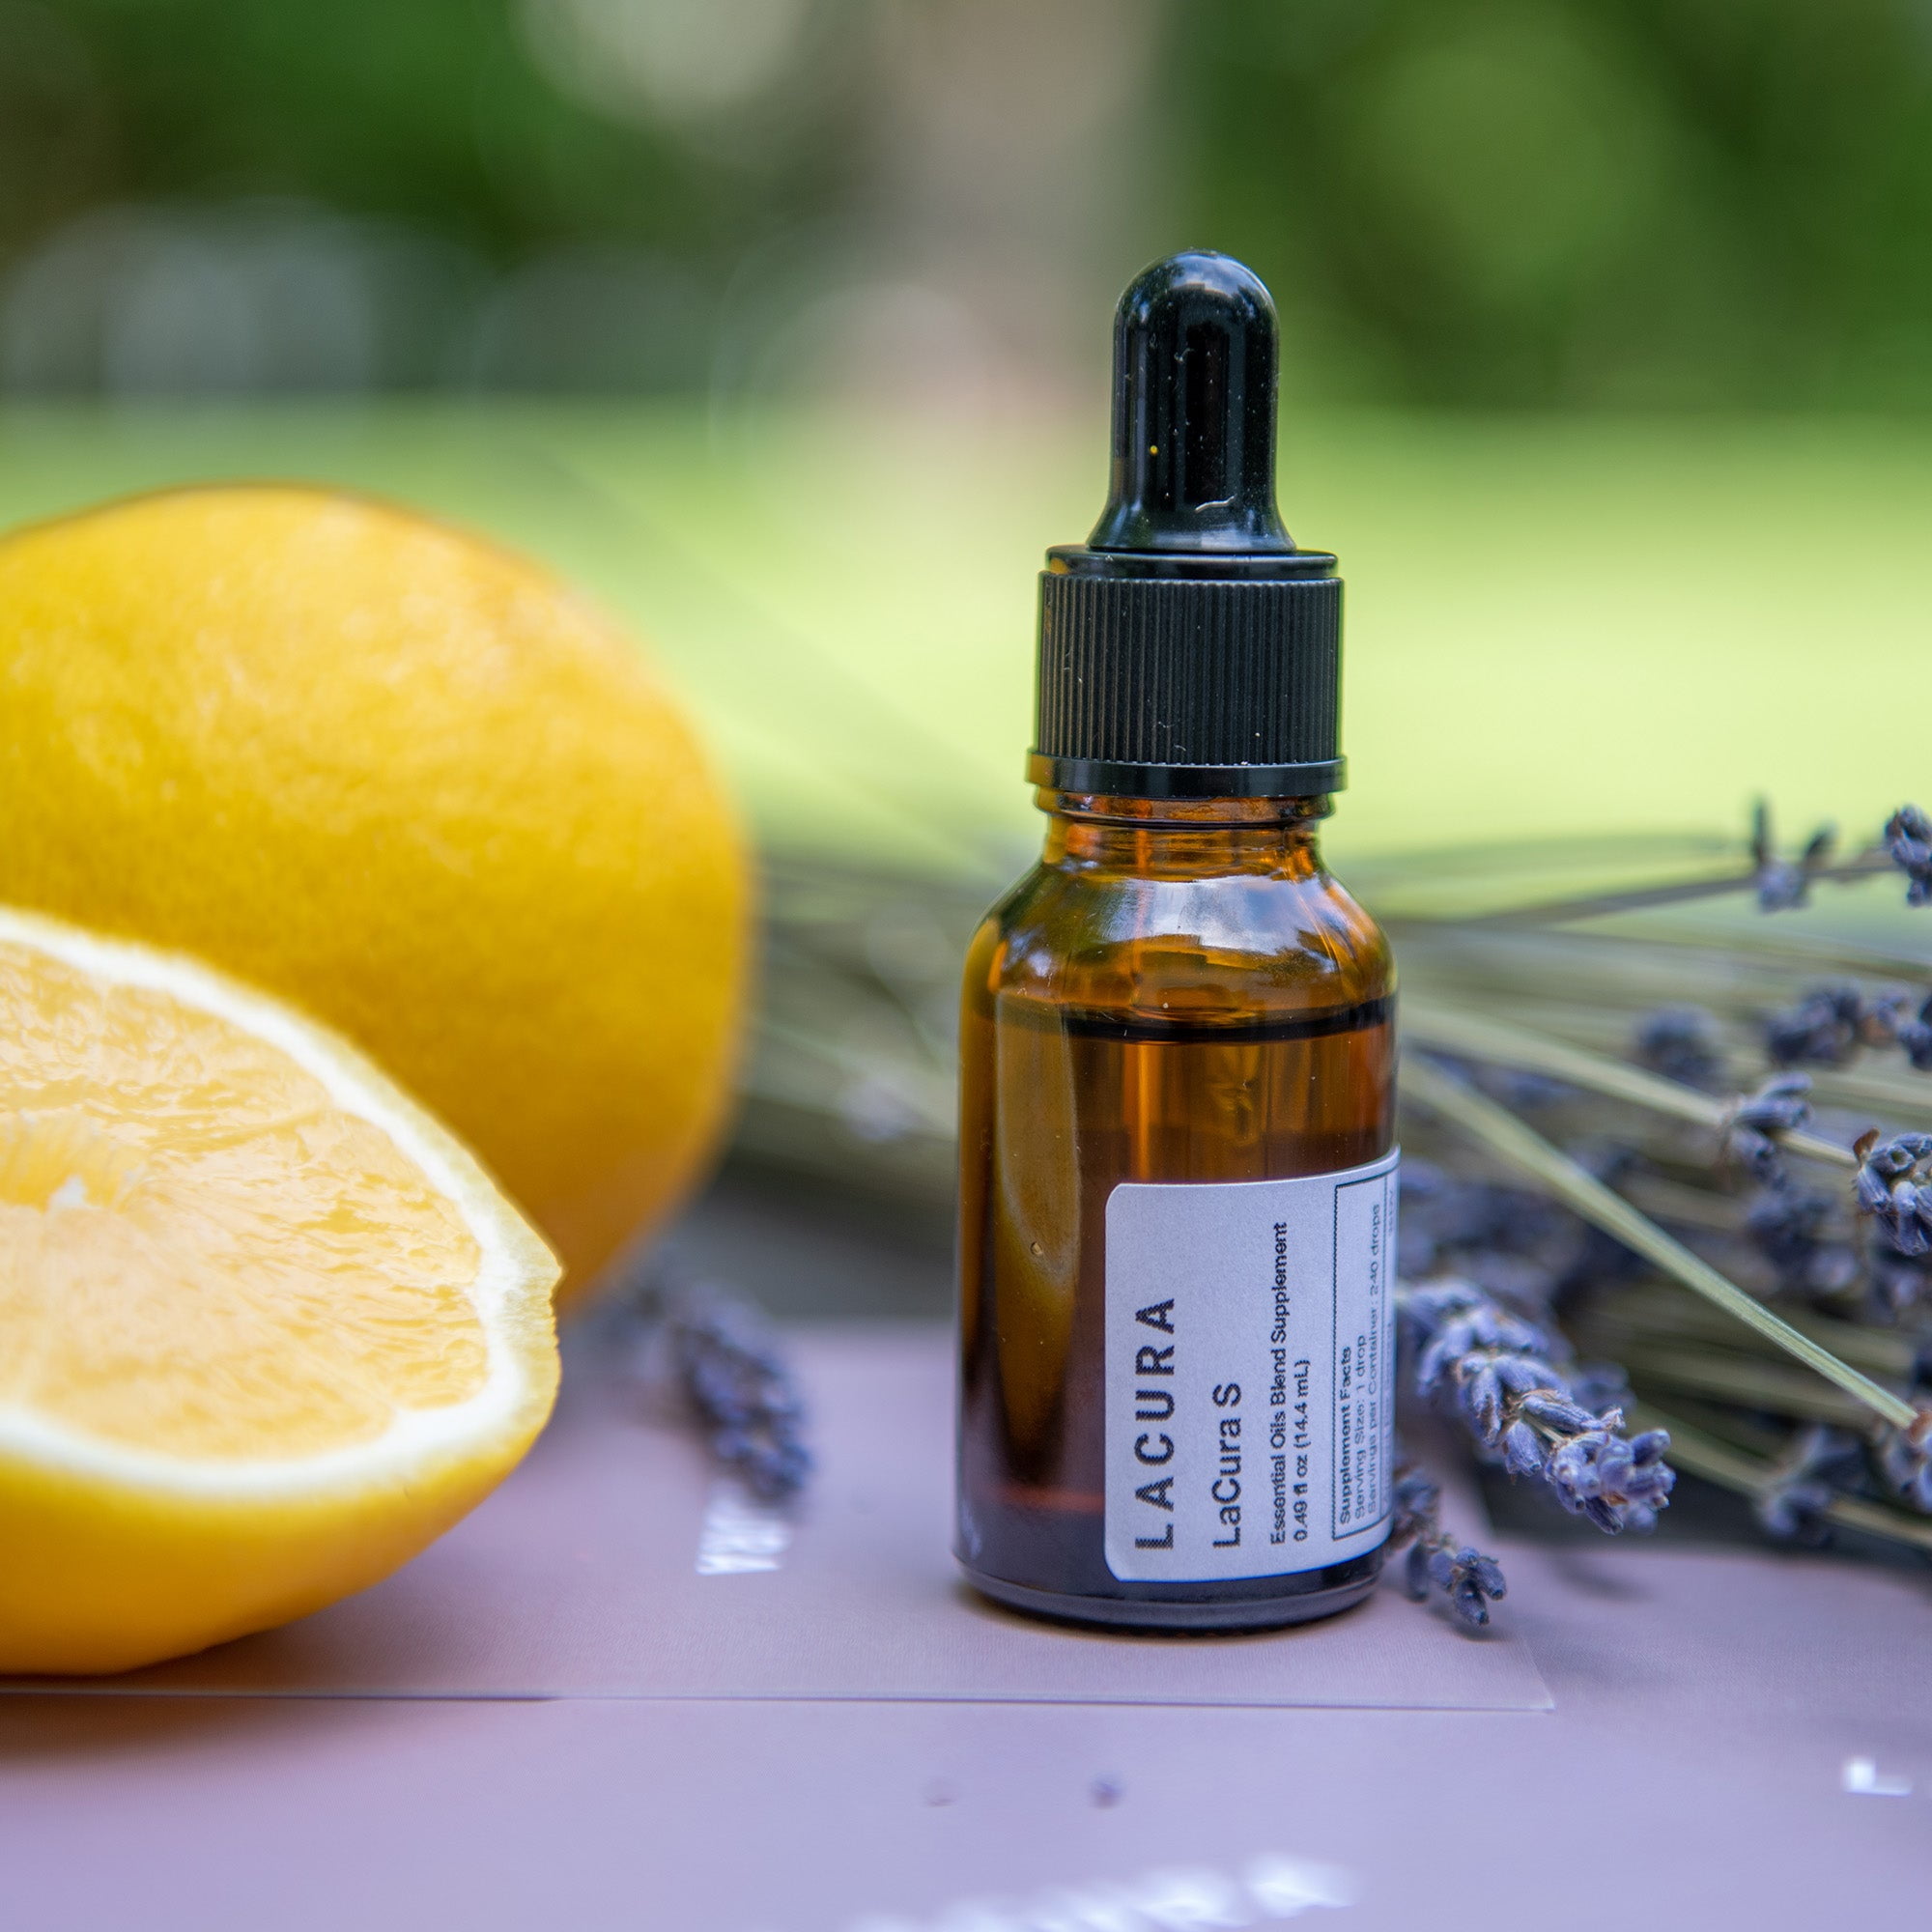 SpaRoom Aromatherapy 100% Pure Undiluted Essential Oil, Revive Lemon  Verbena Blend, 30 mL